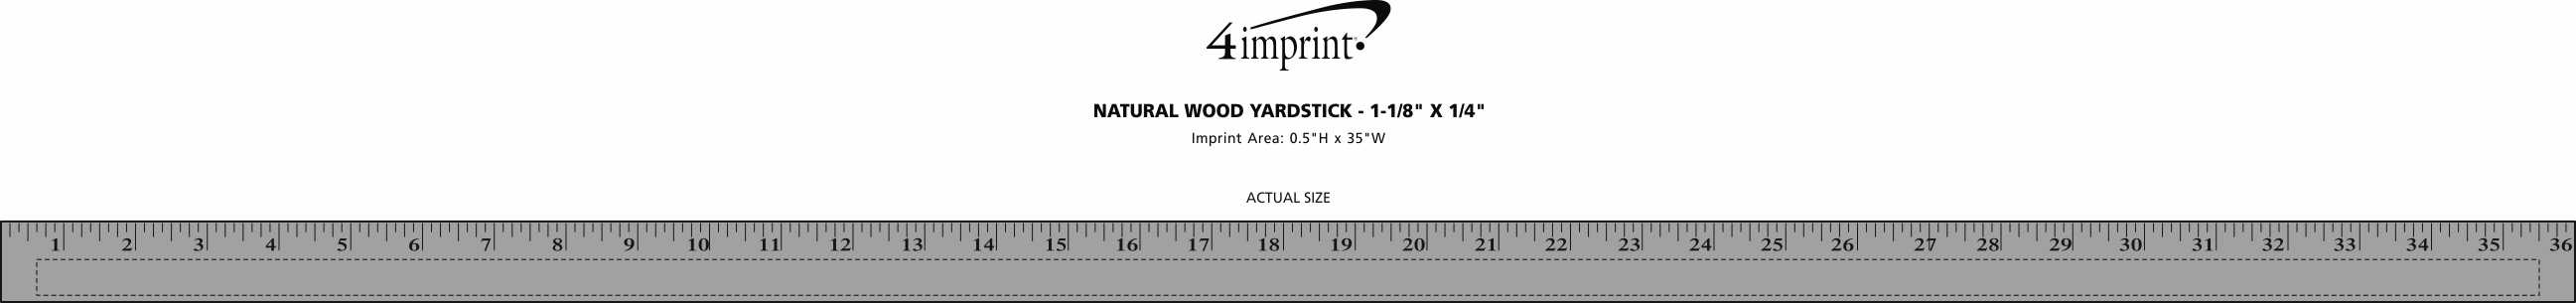 Imprint Area of Natural Wood Yardstick - 1-1/8" x 1/4"